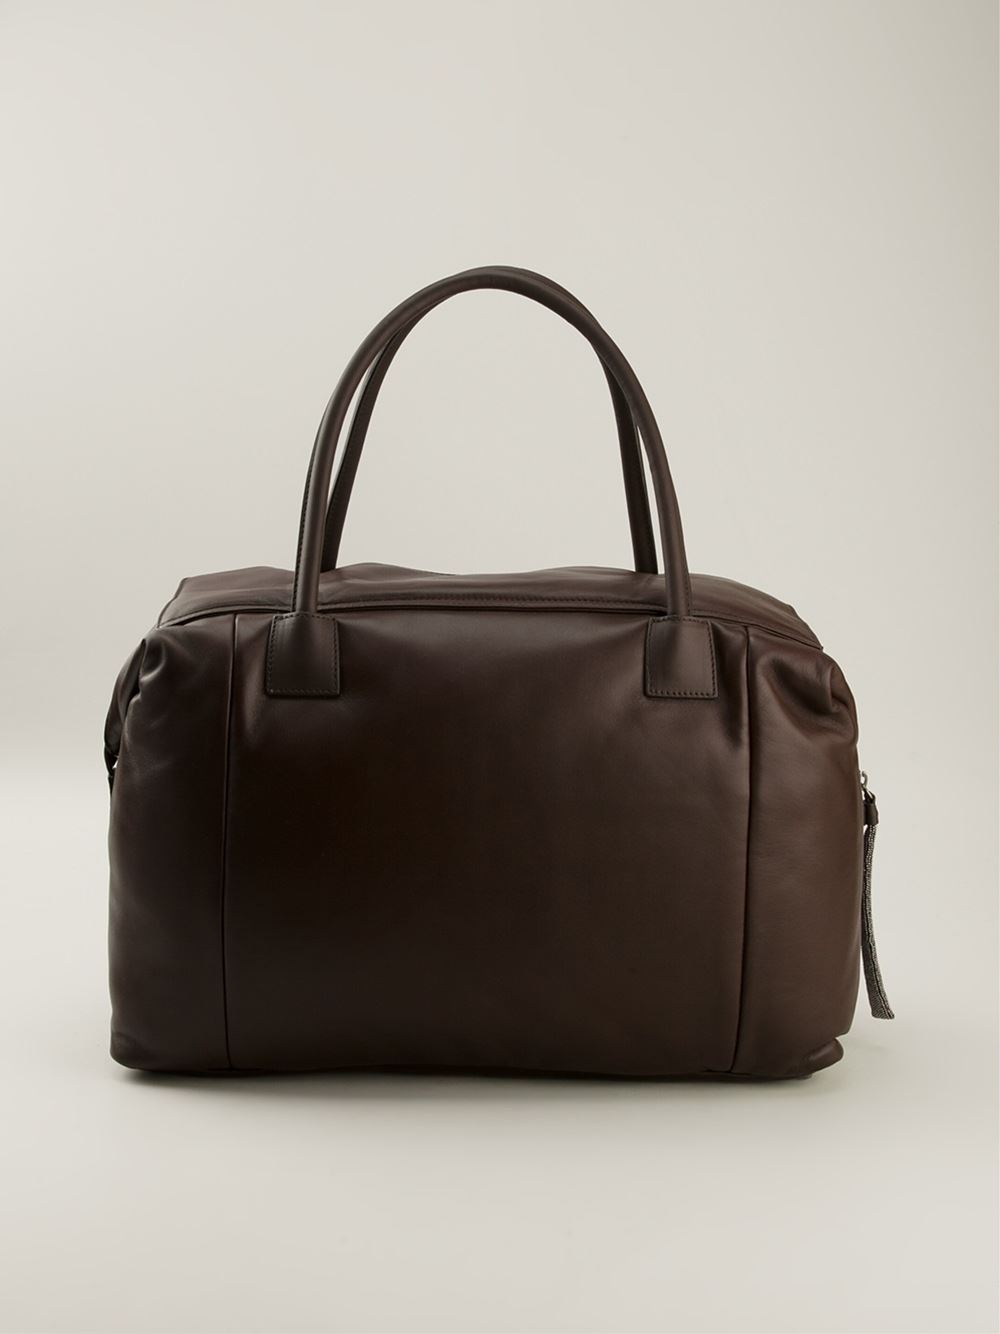 Brunello Cucinelli Rectangular Shape Tote Bag in Brown - Lyst